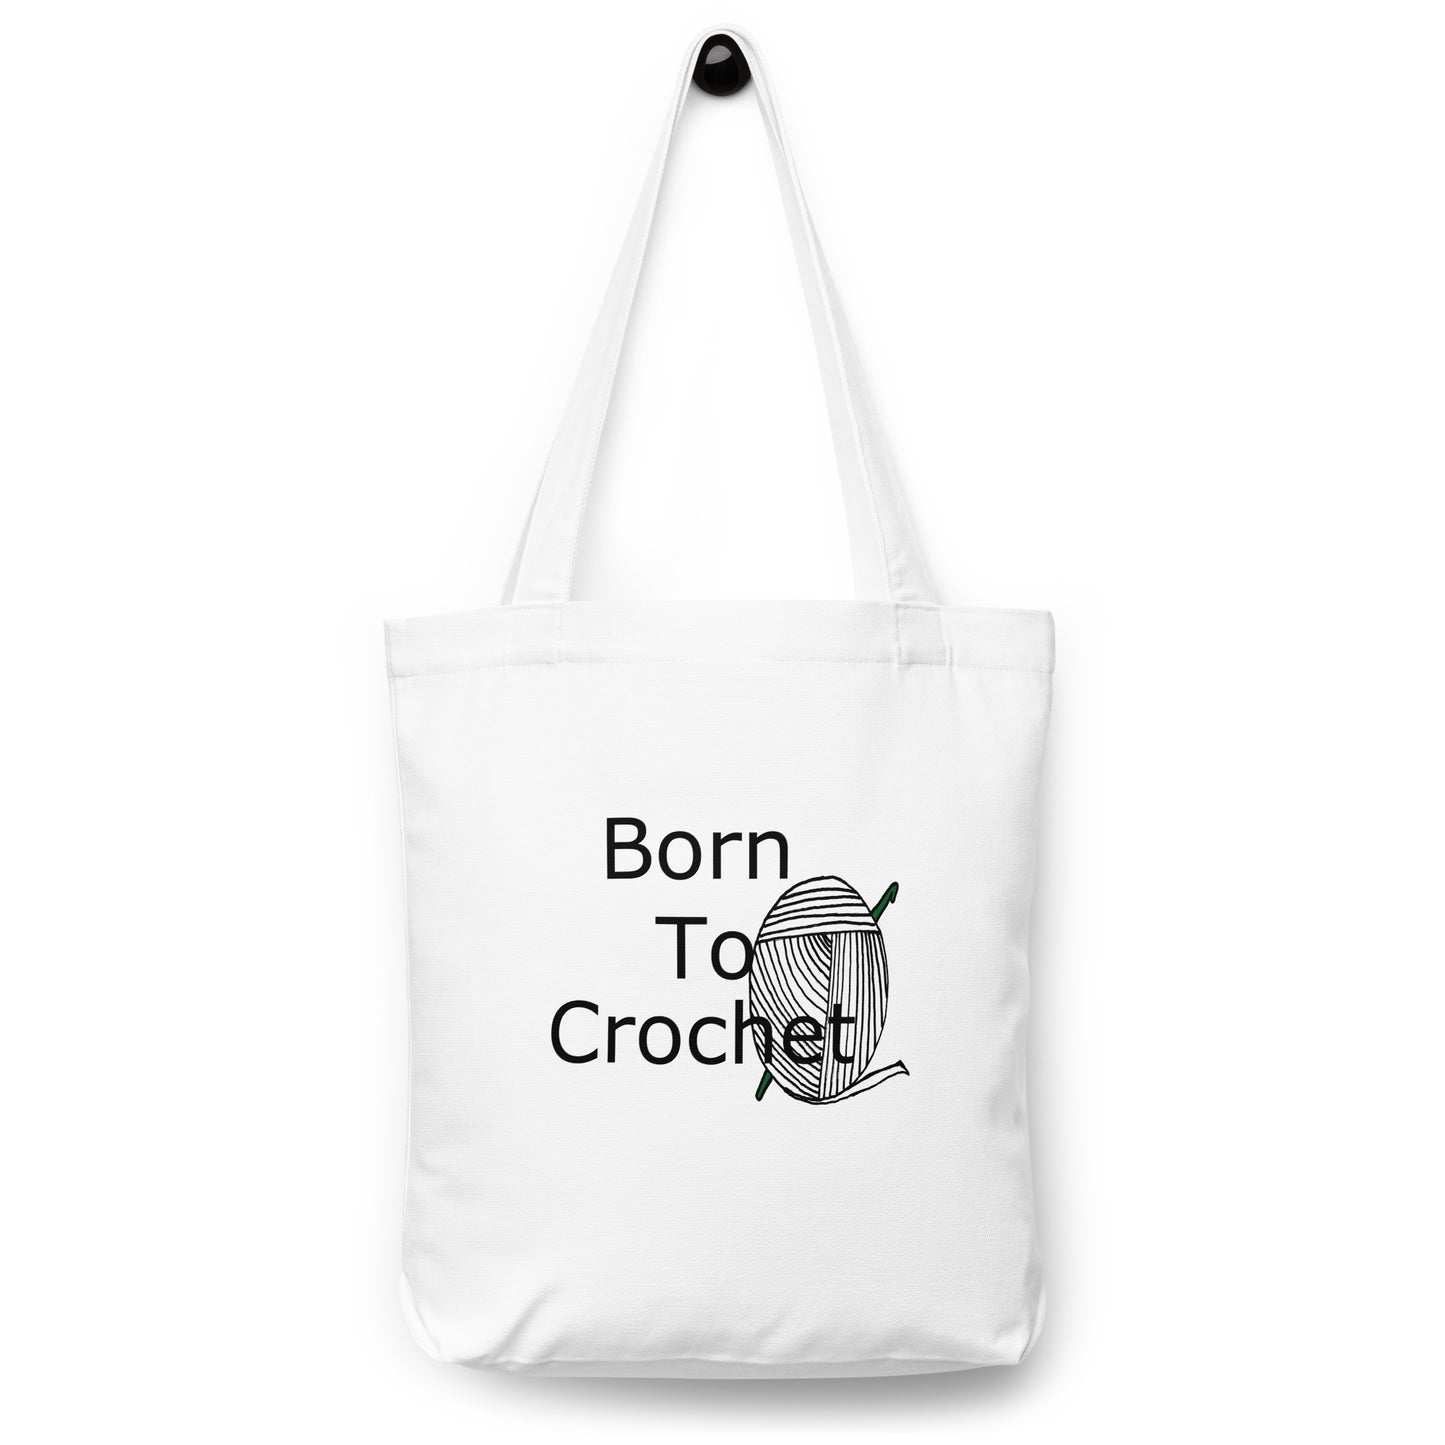 Crochet Lover's Cotton Tote Bag